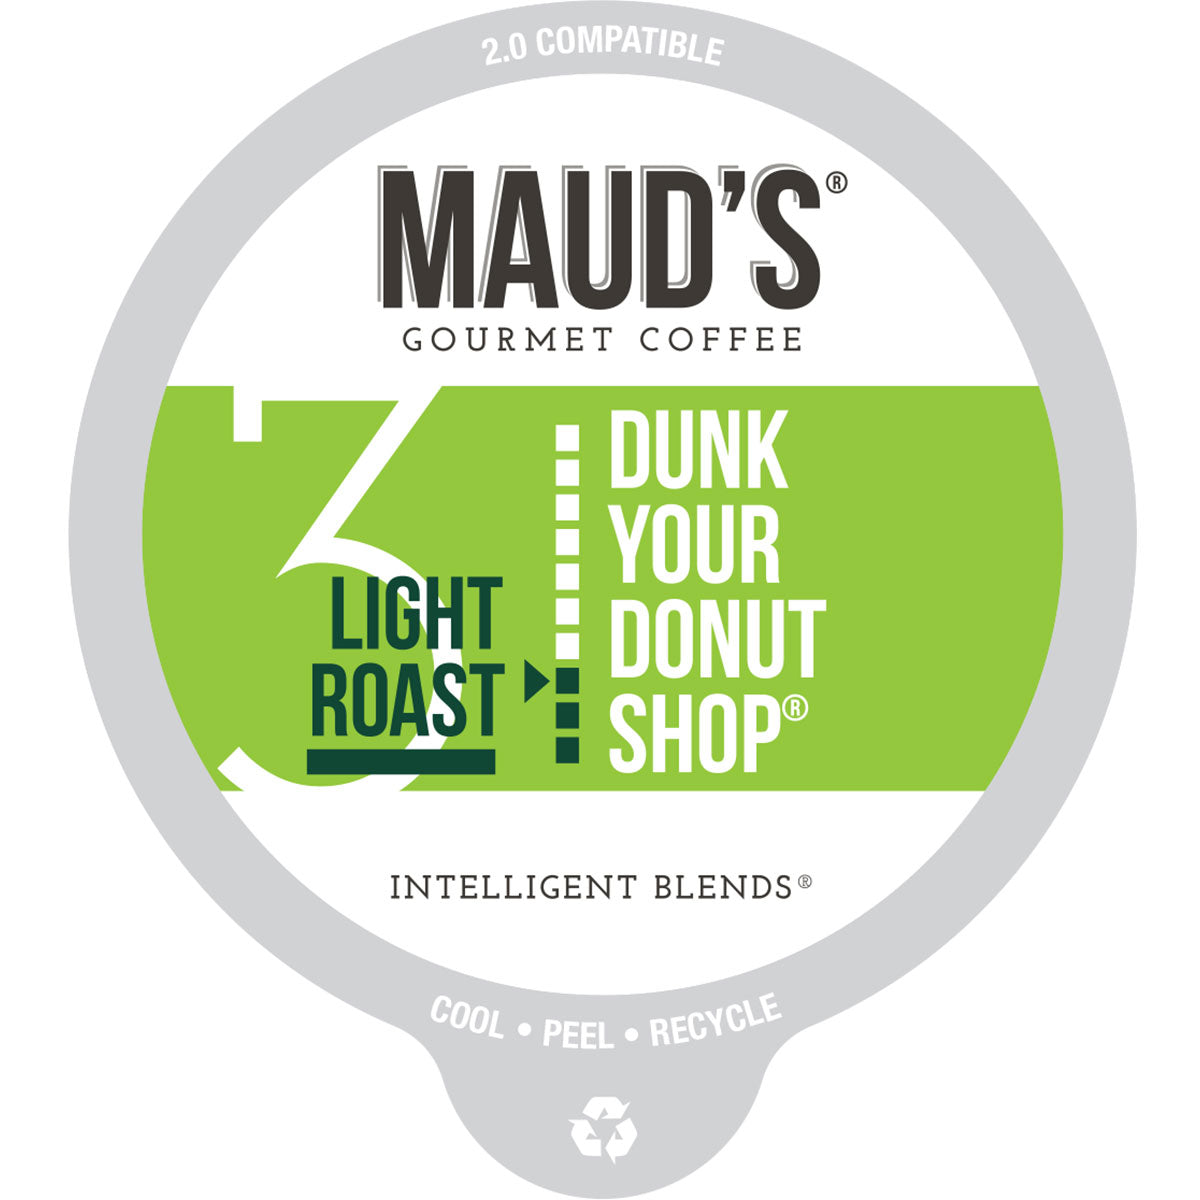 Keurig The Original Donut Shop Medium Roast Iced Mocha + Almond K-cup Pods  - 24ct : Target